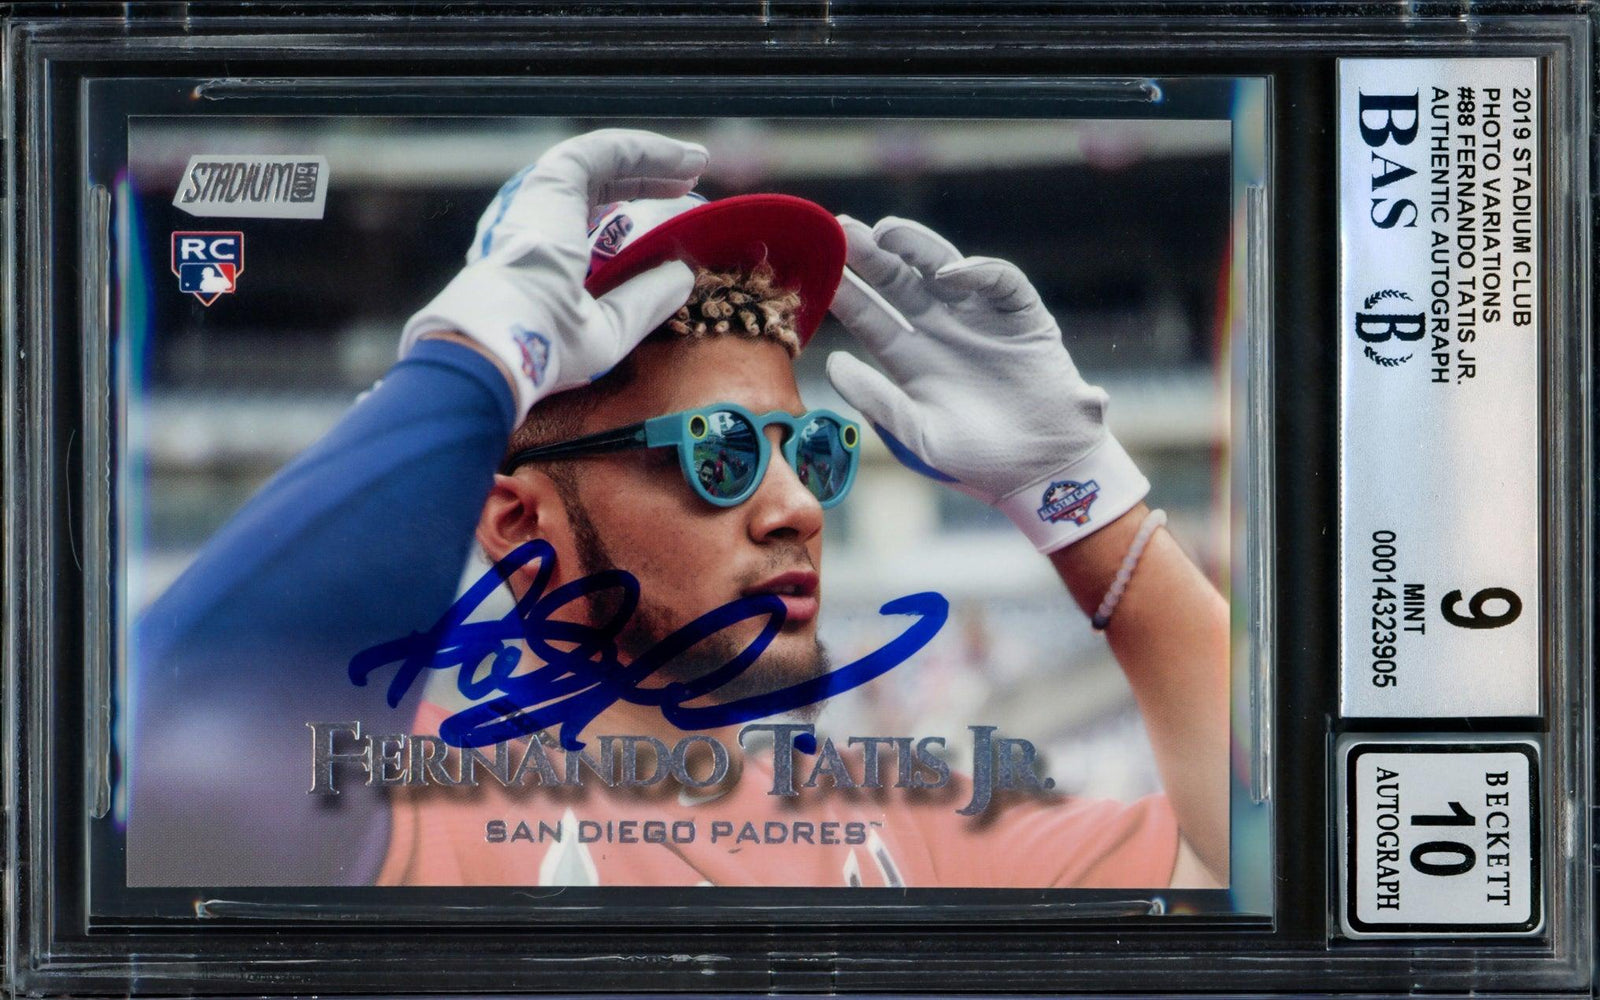 Fernando Tatis Jr. Autographed 2019 Topps Stadium Club Sunglass Variation Rookie Card #88 San Diego Padres BGS 9 Auto Grade Gem Mint 10 Beckett BAS #14323905 - RSA